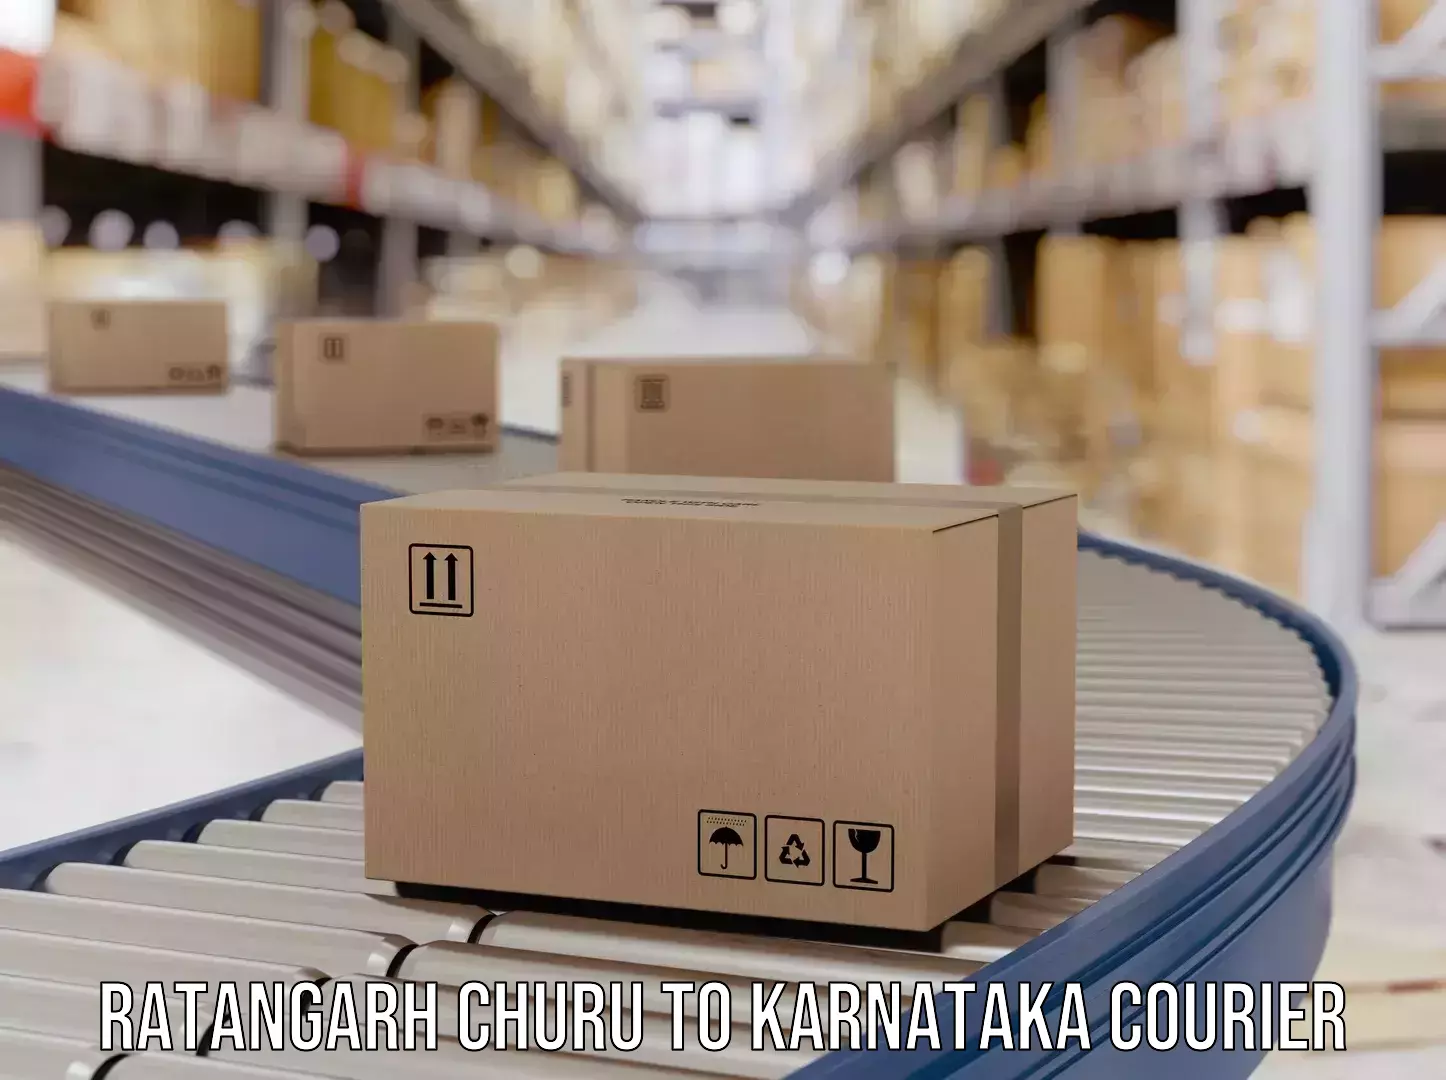 Global logistics network Ratangarh Churu to Kollegal